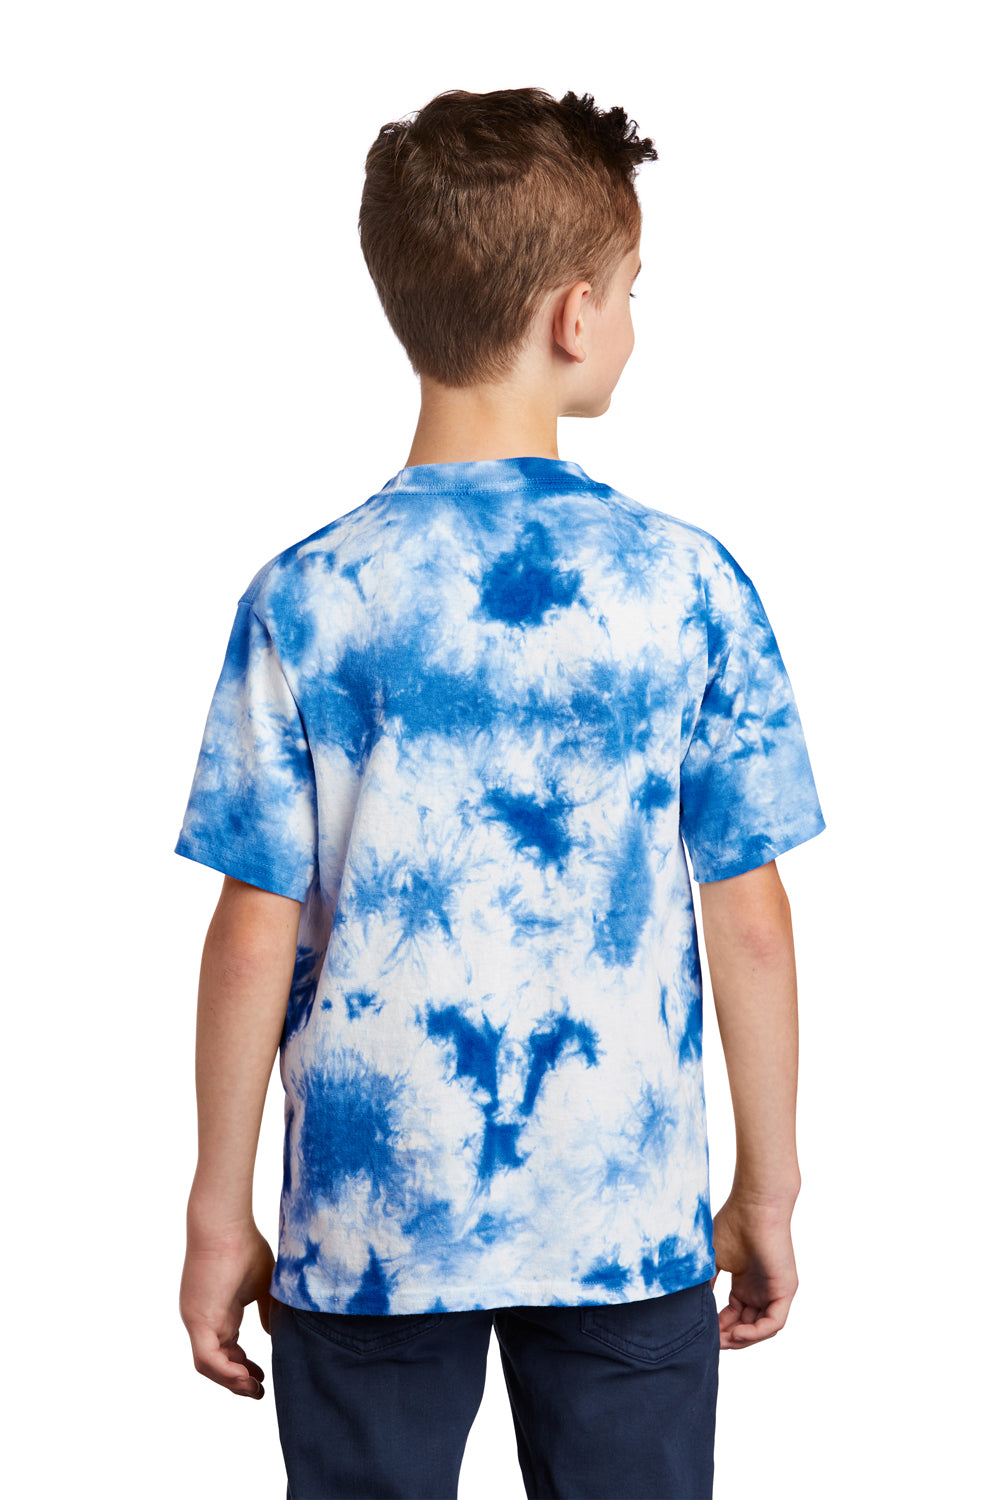 Port & Company Youth Crystal Tie-Dye Short Sleeve Crewneck T-Shirt True Royal Blue Side